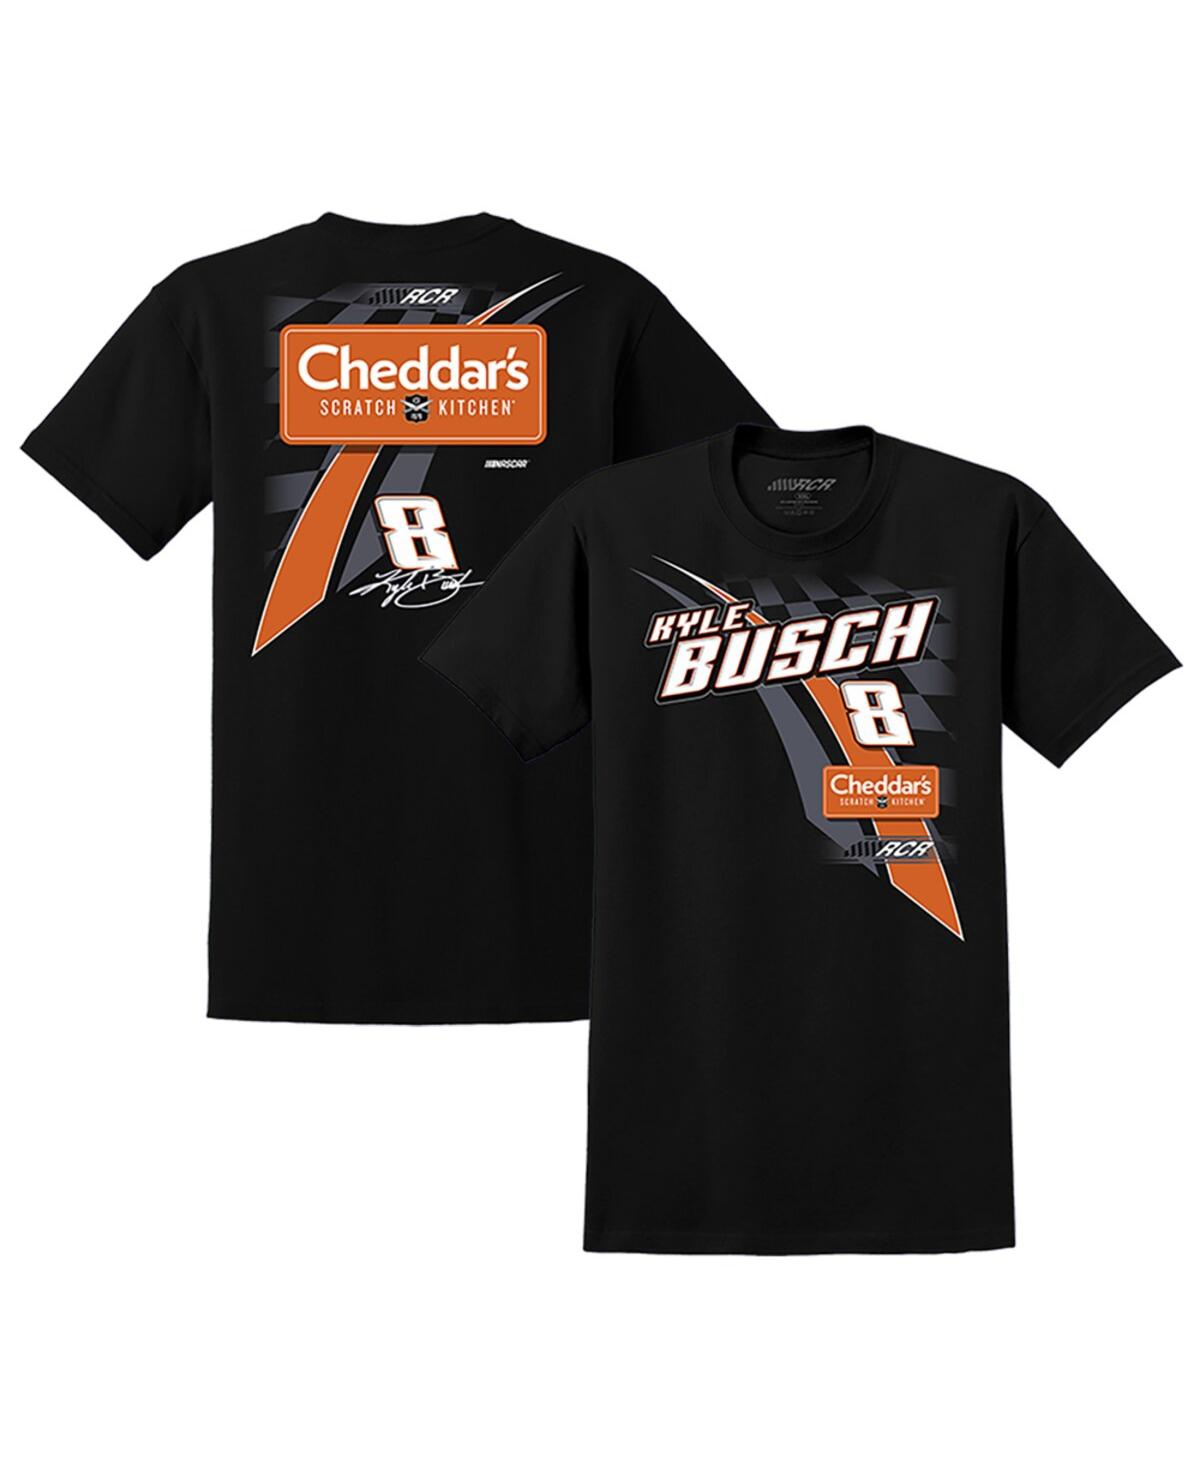 Men's Richard Childress Racing Team Collection Black Kyle Busch Cheddar's Lifestyle T-shirt - Black